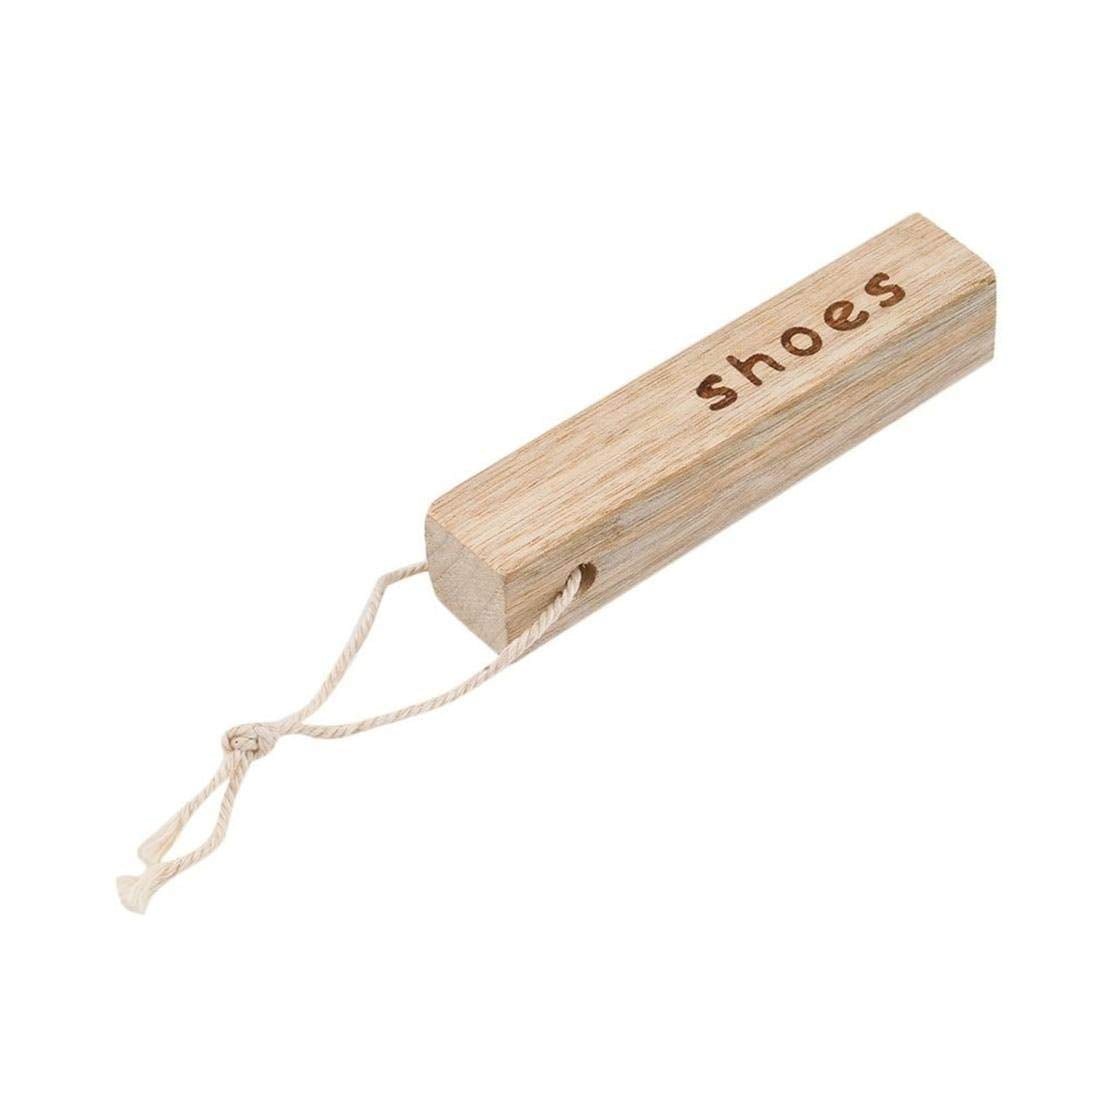 Shoes Wooden Deodorant Stick - Home Essentials Store Retail